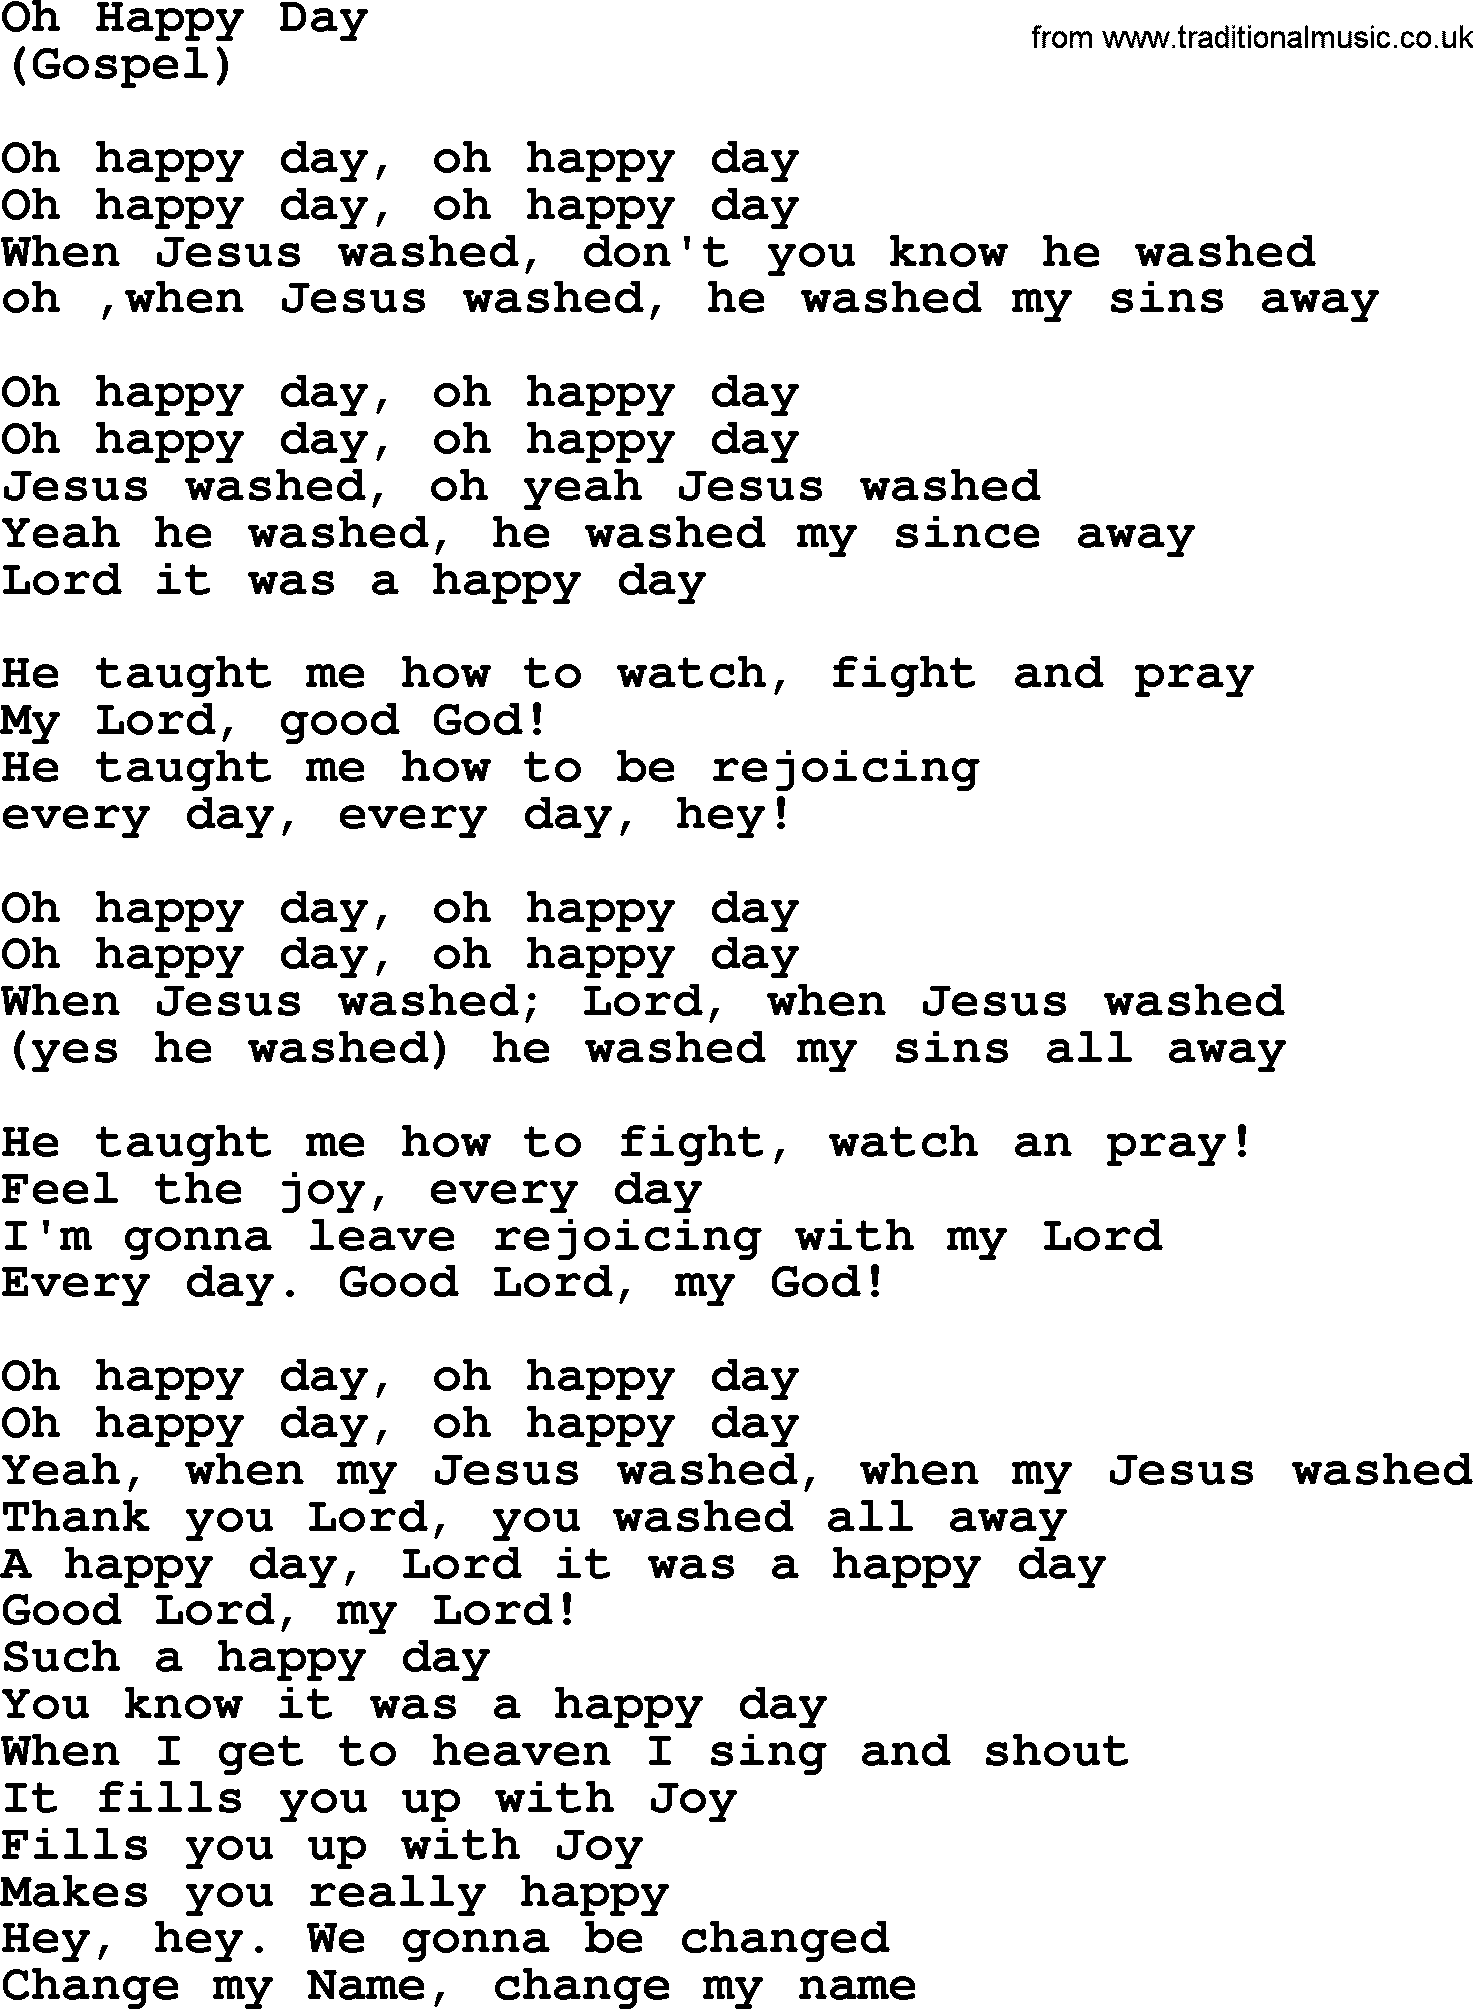 The Byrds song Oh Happy Day, lyrics